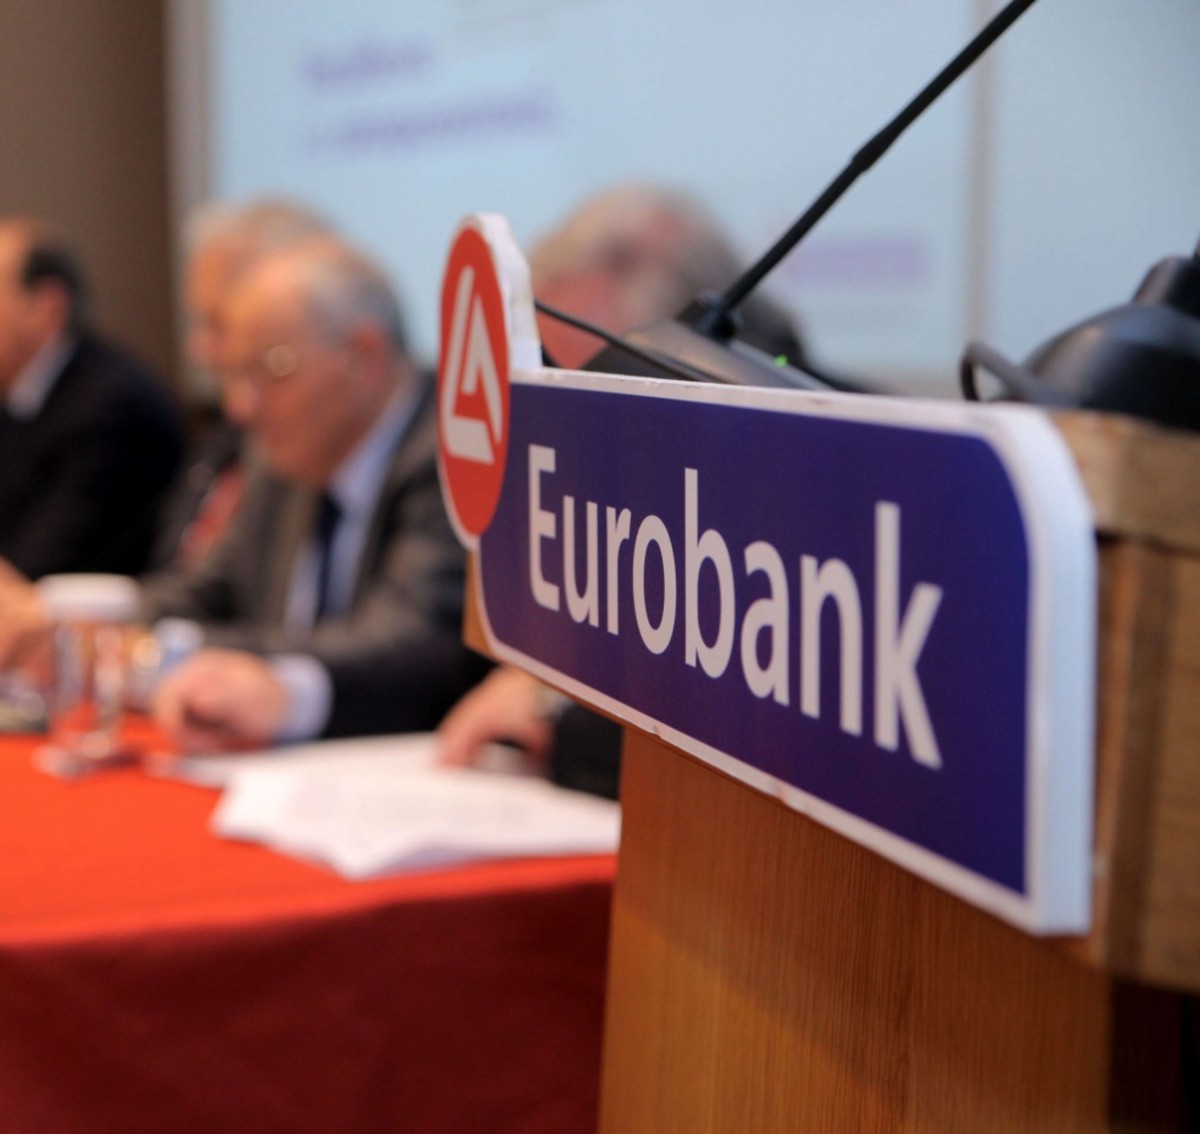 Eurobank: Σημαντικά περιθώρια αισιοδοξίας για τις προοπτικές της πραγματικής οικονομίας